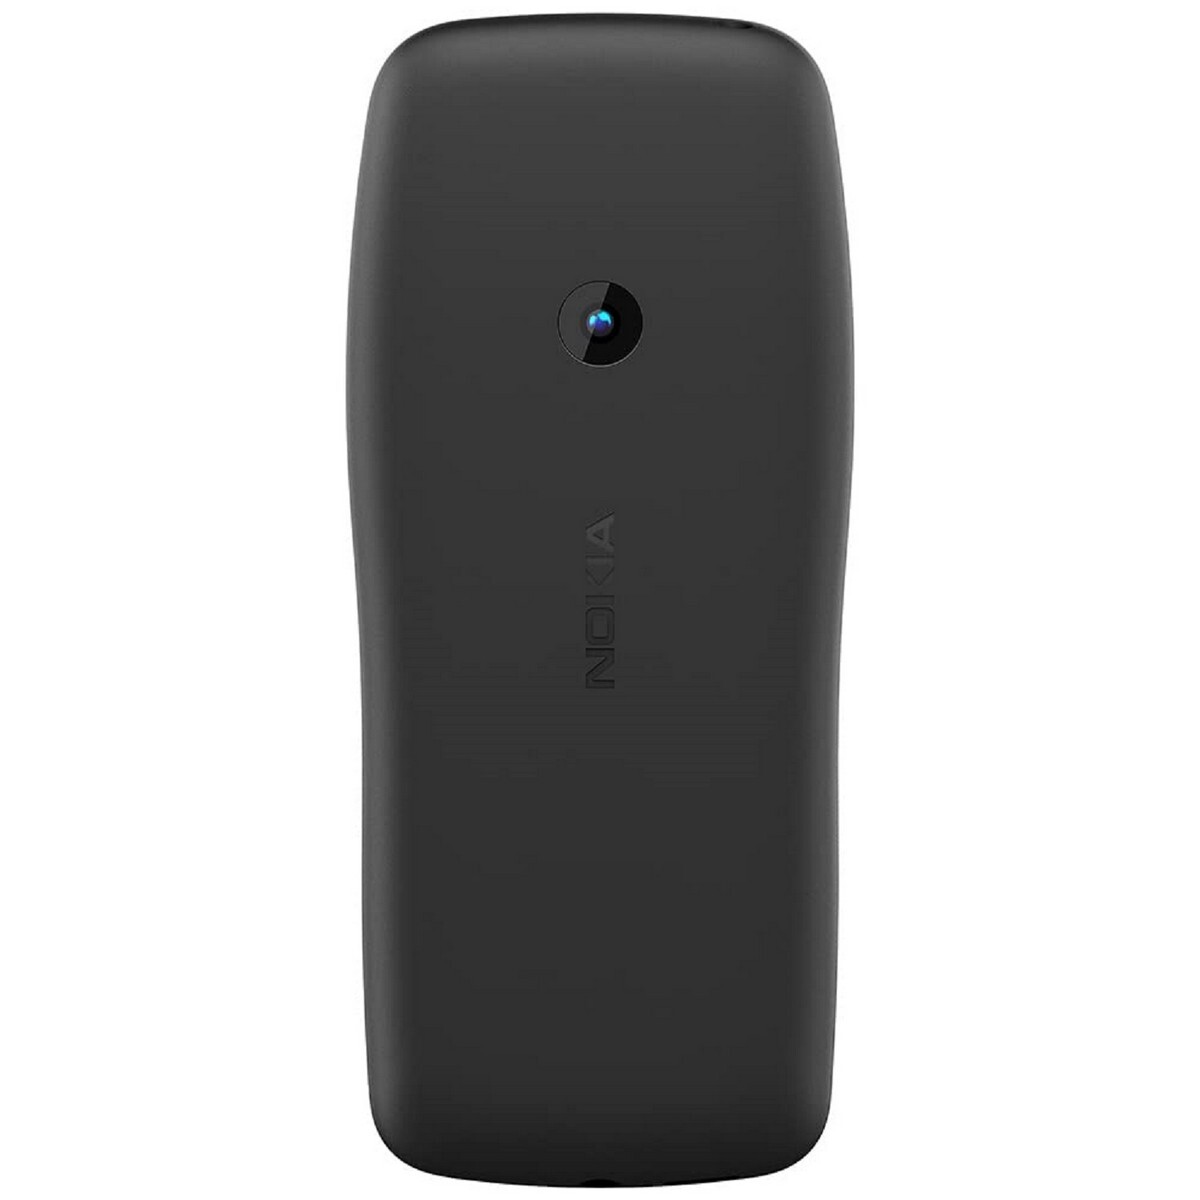 Nokia Mobile Phone 110 Dual Sim Charcoal